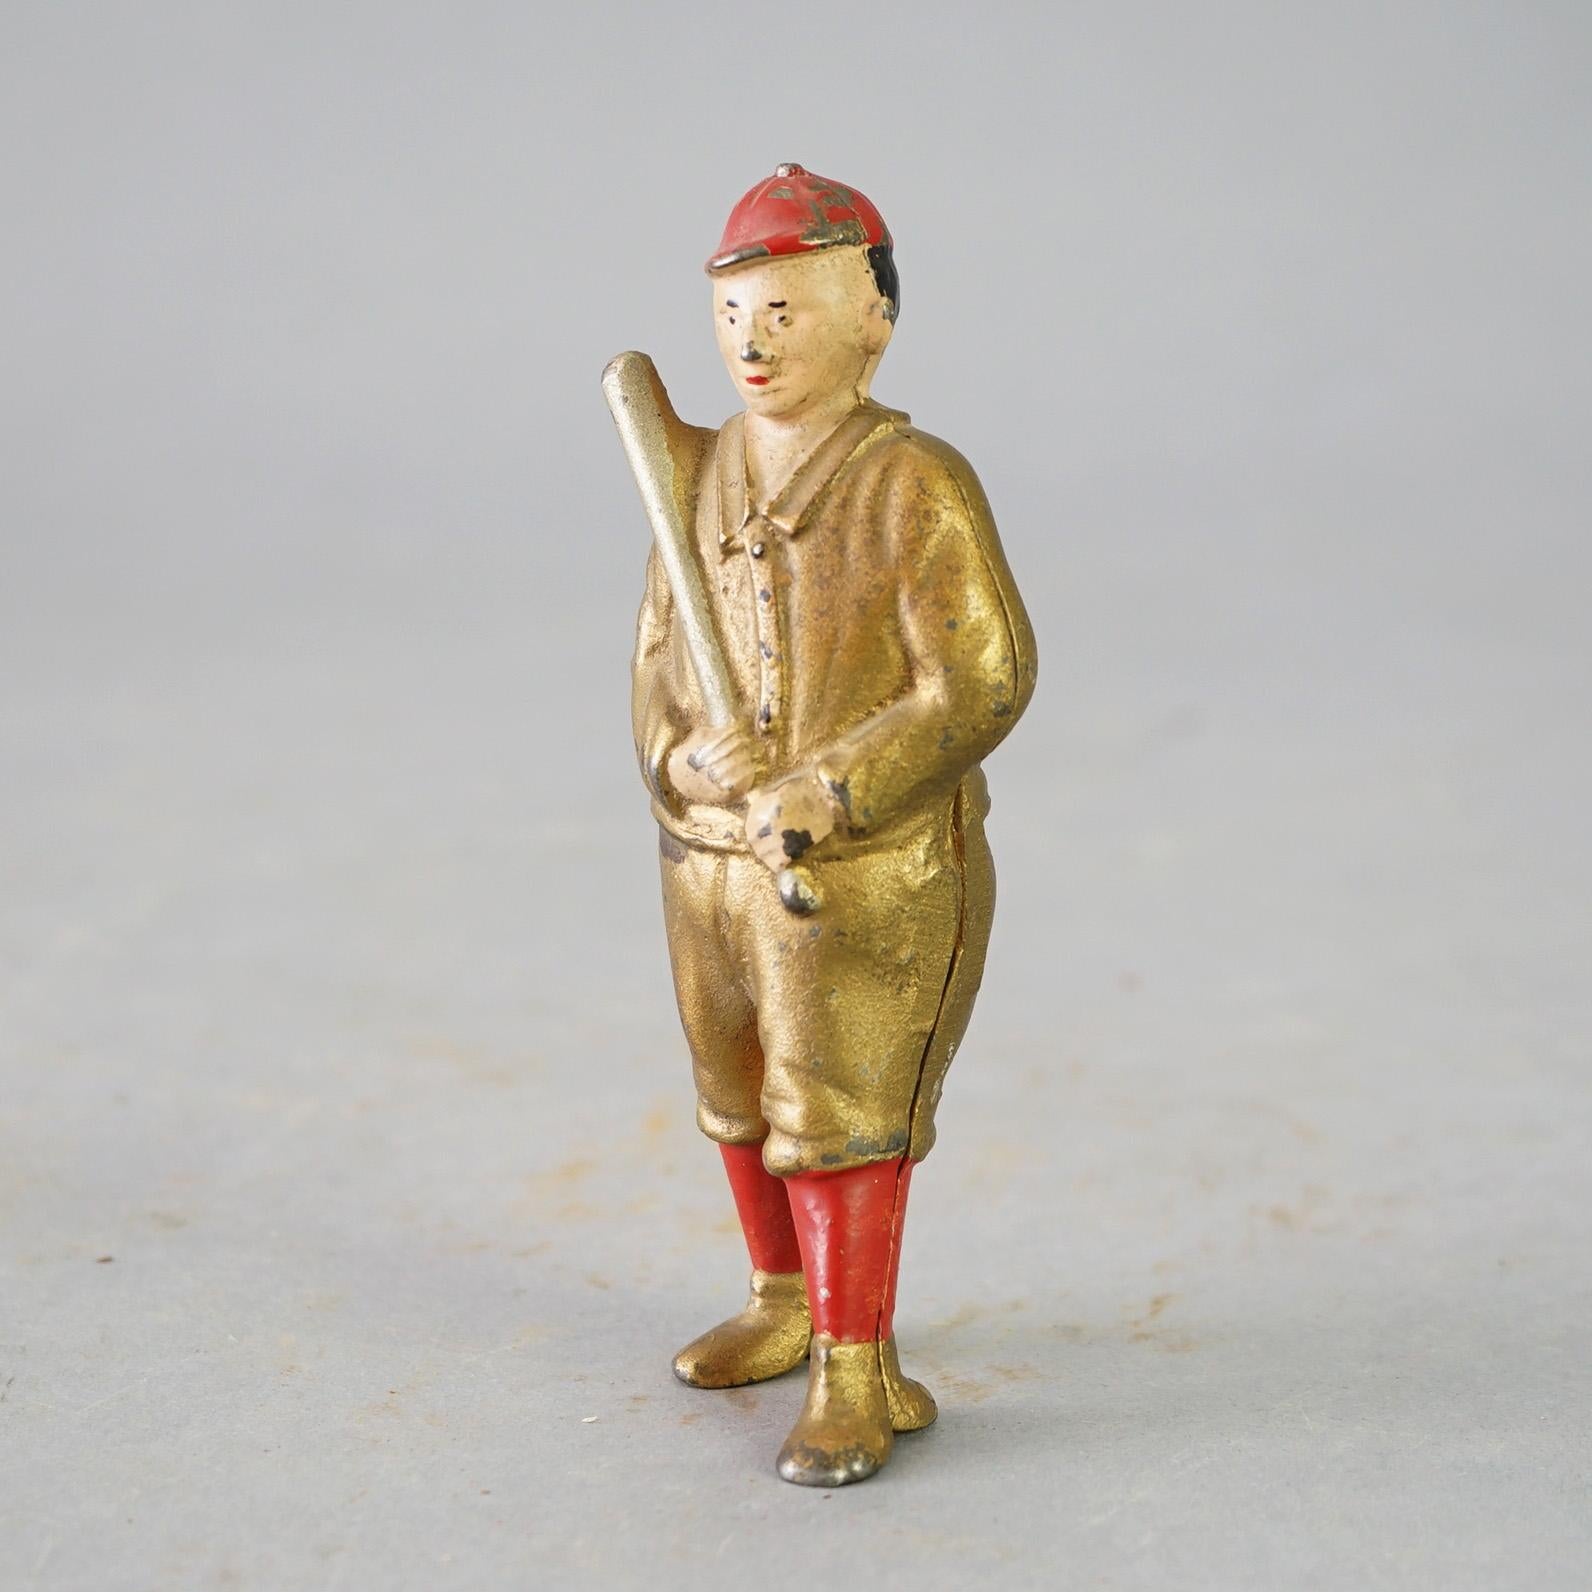 Antique Polychromed Figurative Cast Iron Baseball Player Sports Still Coin Bank Circa 1920

Measures- 5.75''H x 2''W x 2''D